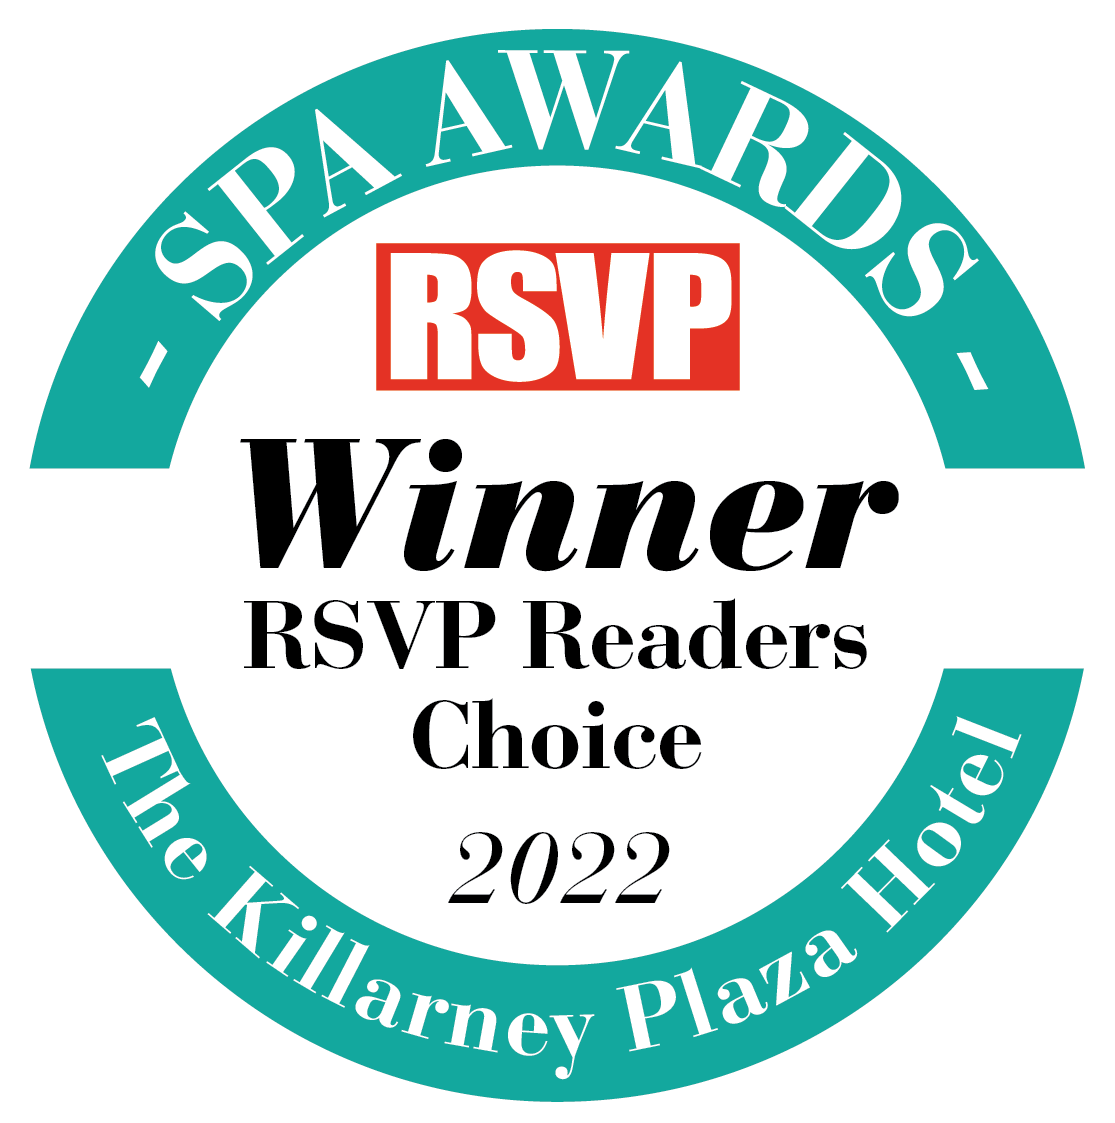 the killarney plaza hotel reader choice winner 2022 1